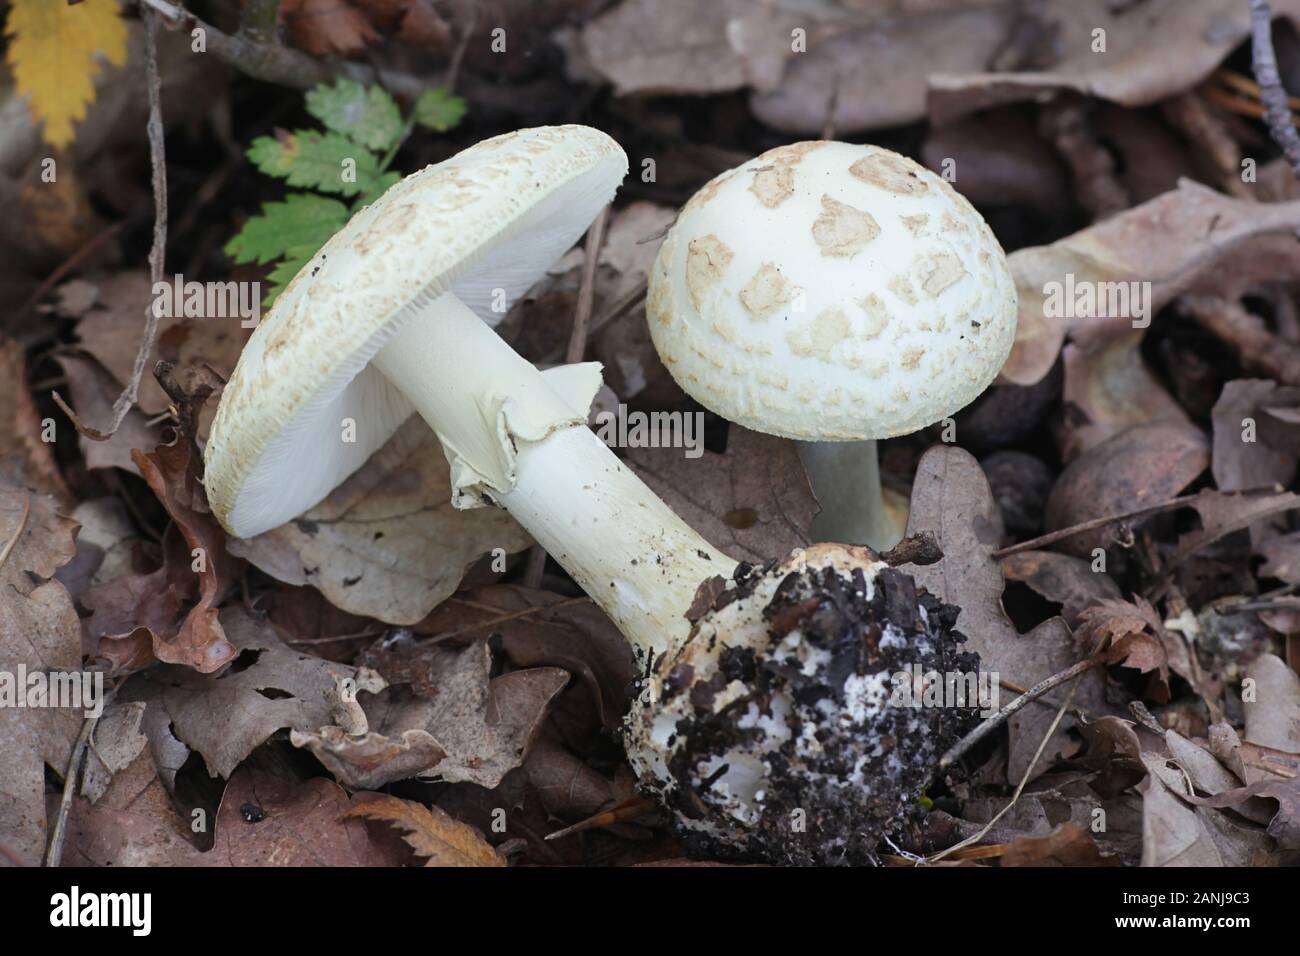 Amanita citrina, known as the false death cap or Citron Amanita, poisonous mushrooms from Finland Stock Photo